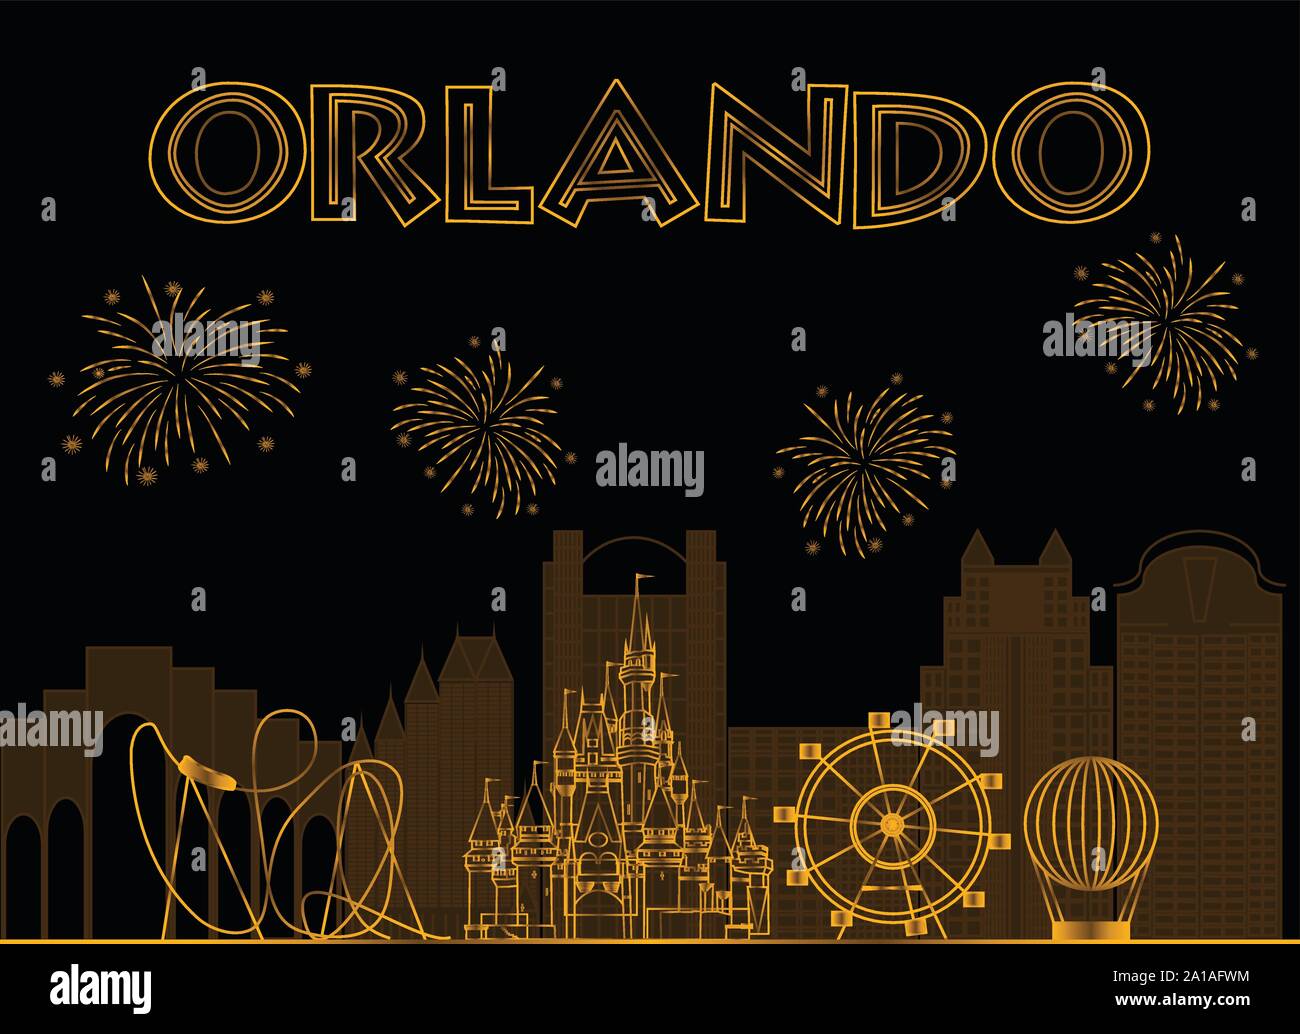 Orlando, Floride. Orlando lettrage doré sur fond noir. Scénario avec icônes de voyage et d'artifice.. Illustration de Vecteur